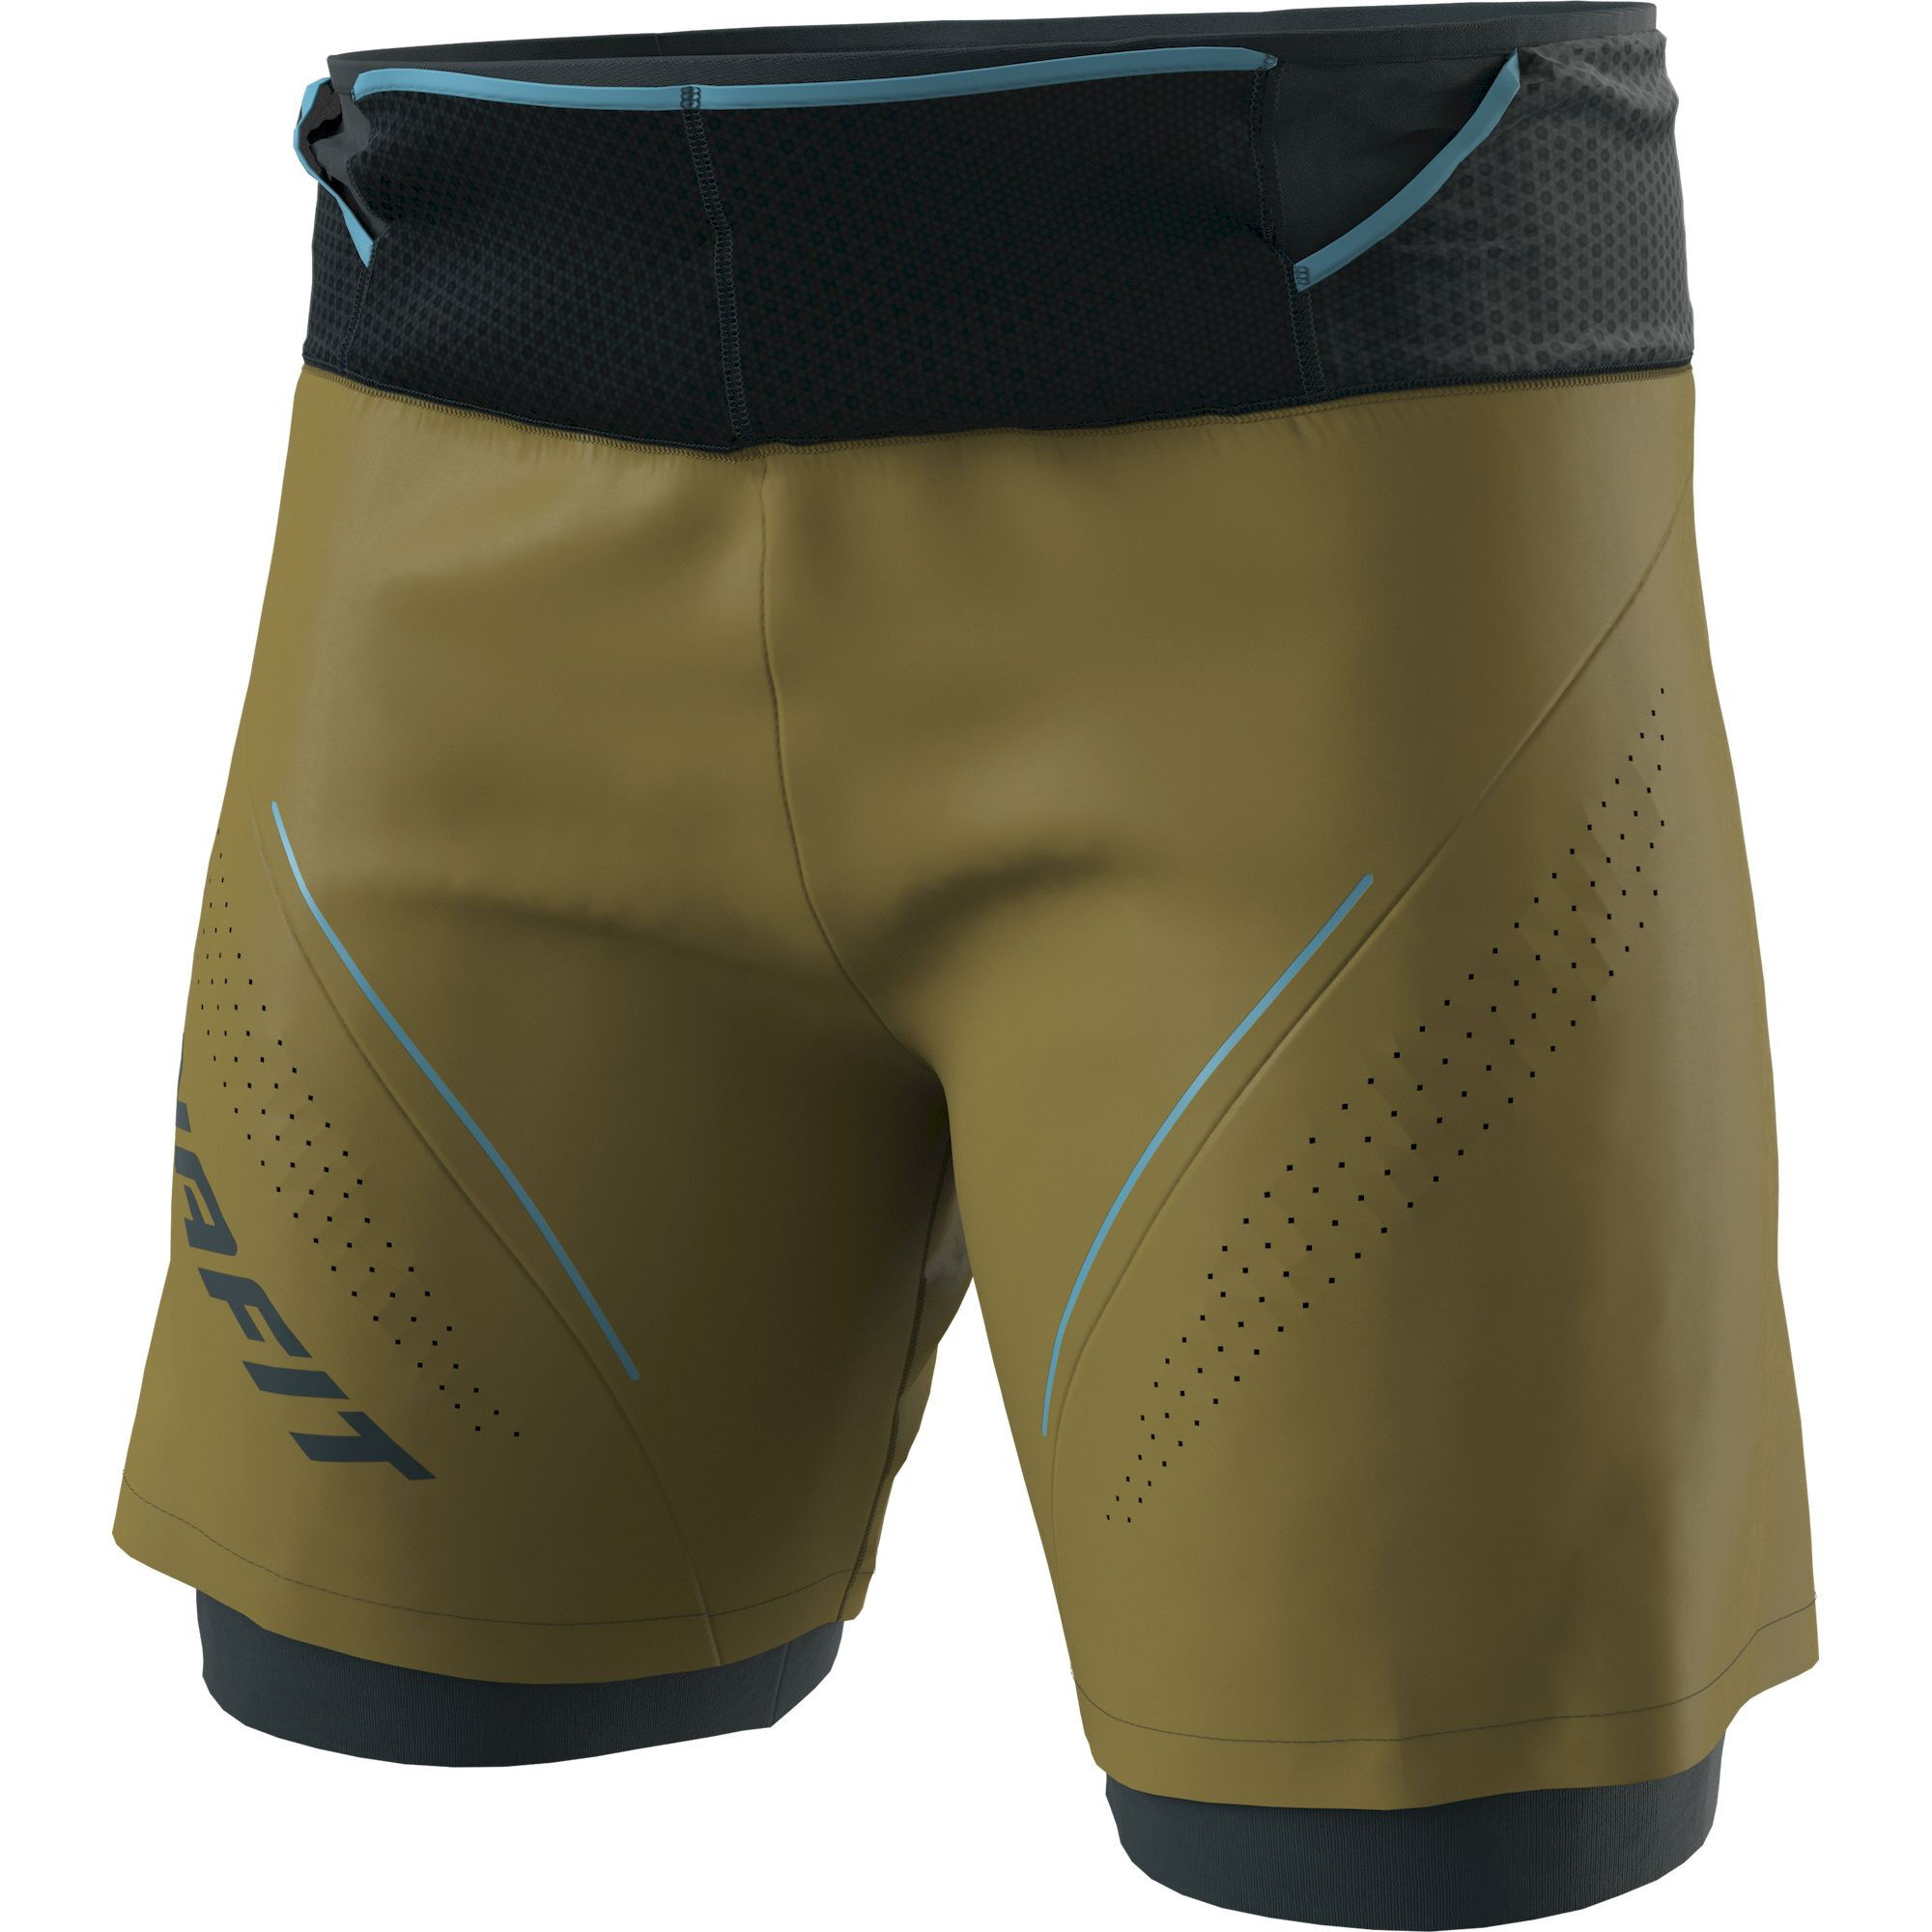 Ultra 2/1 - Pantalones cortos trail running - Hombre